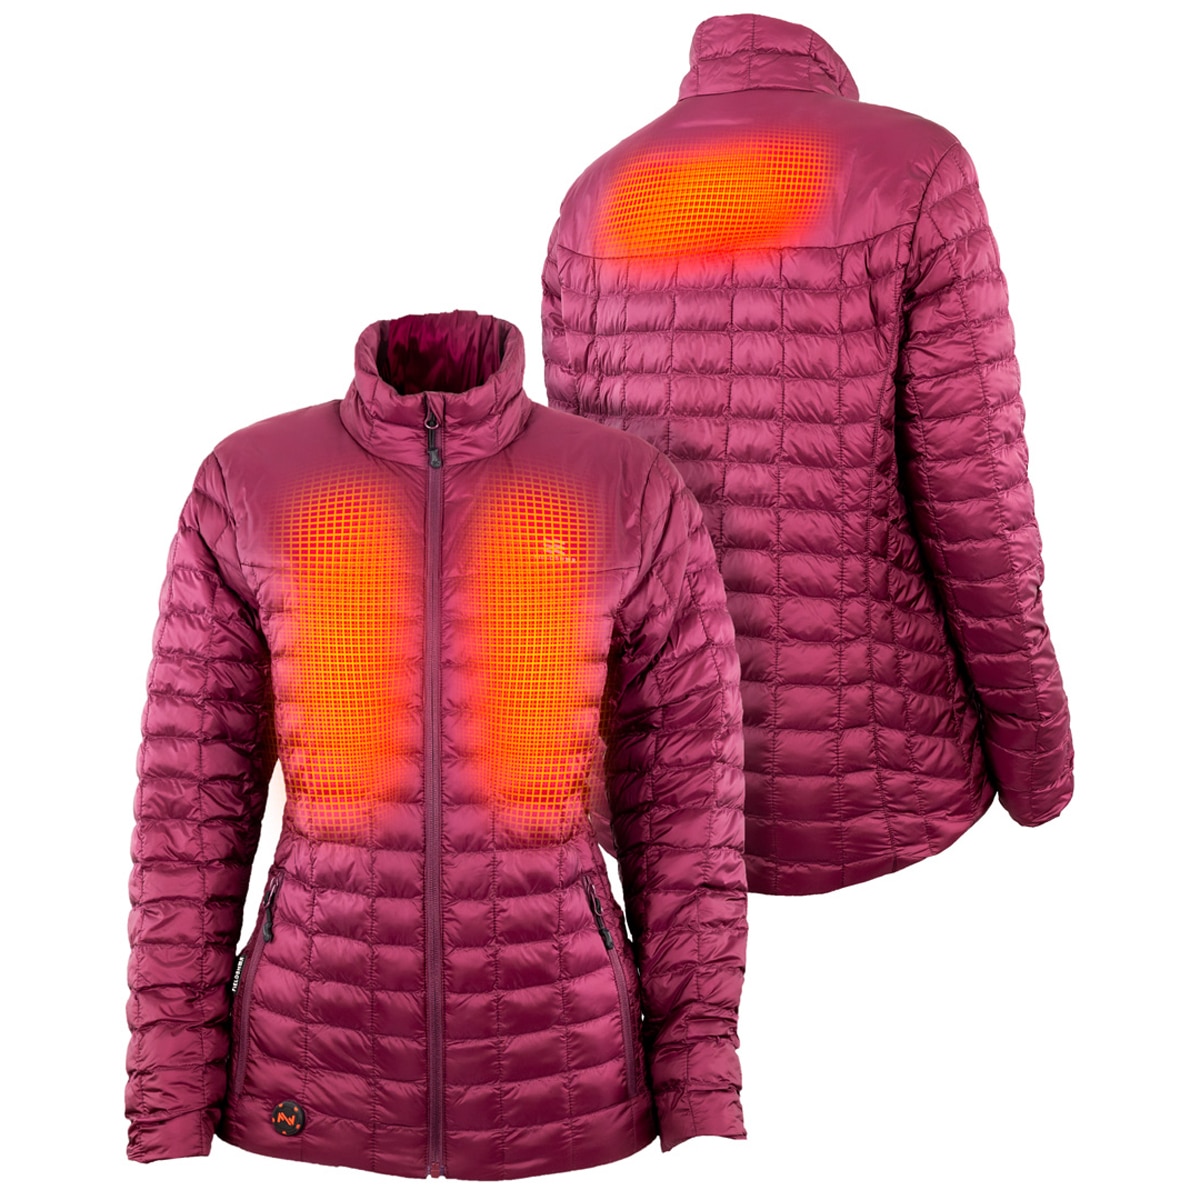 FieldSheer By Mobile Warming Women's Backcountry Heated Jacket